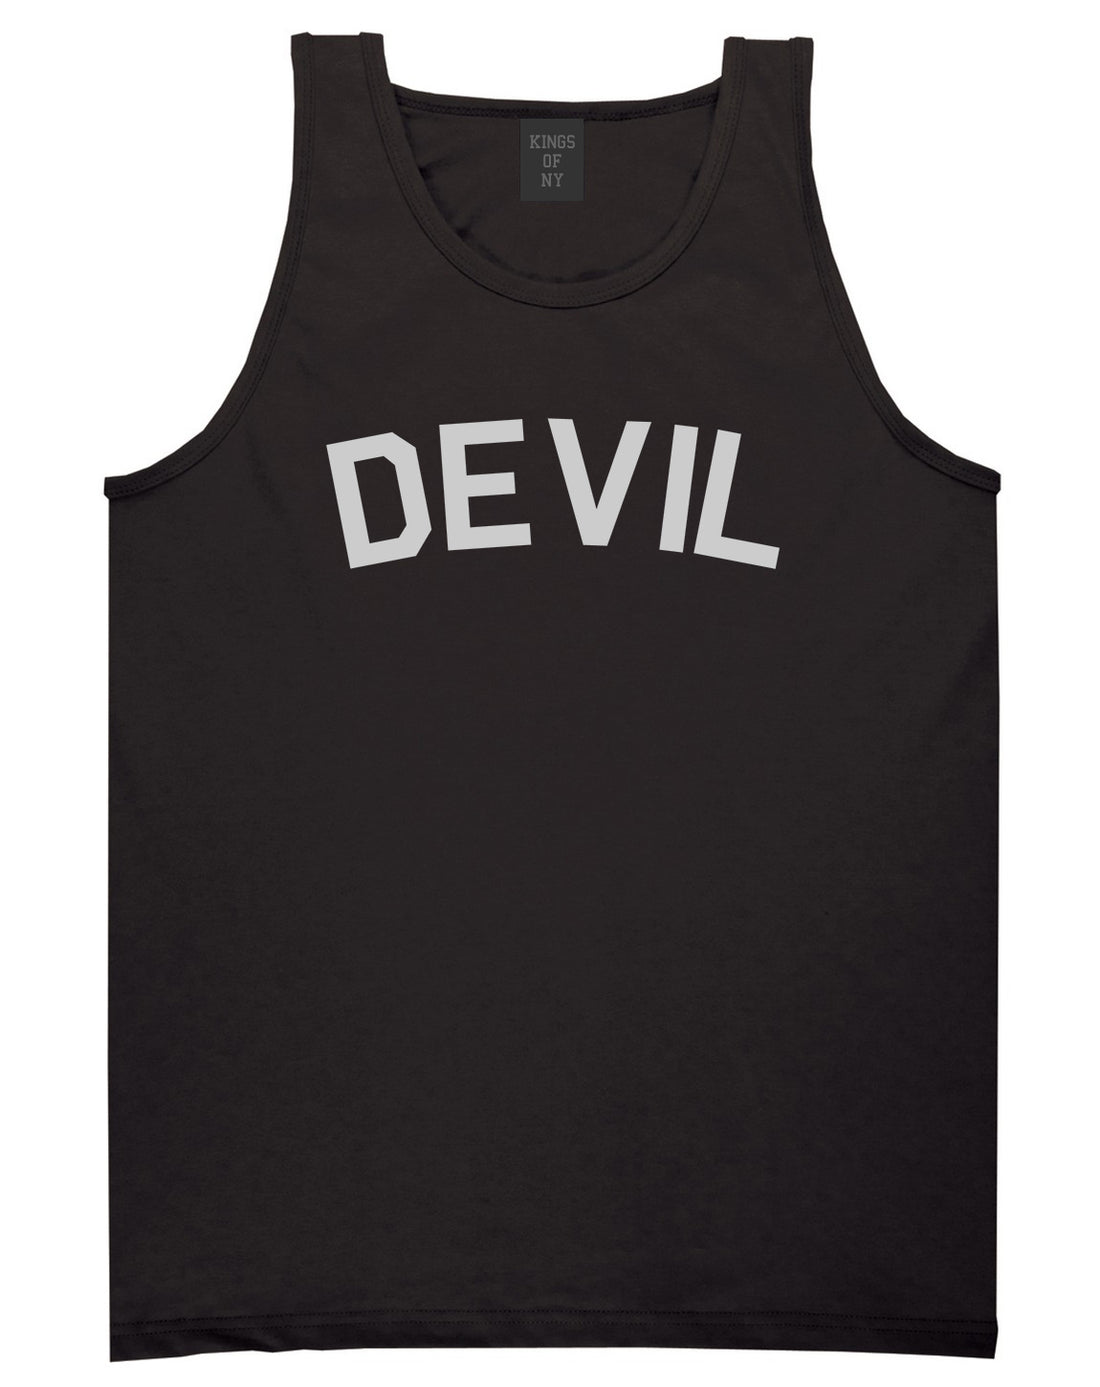 Devil Arch Goth Tank Top Shirt in Black